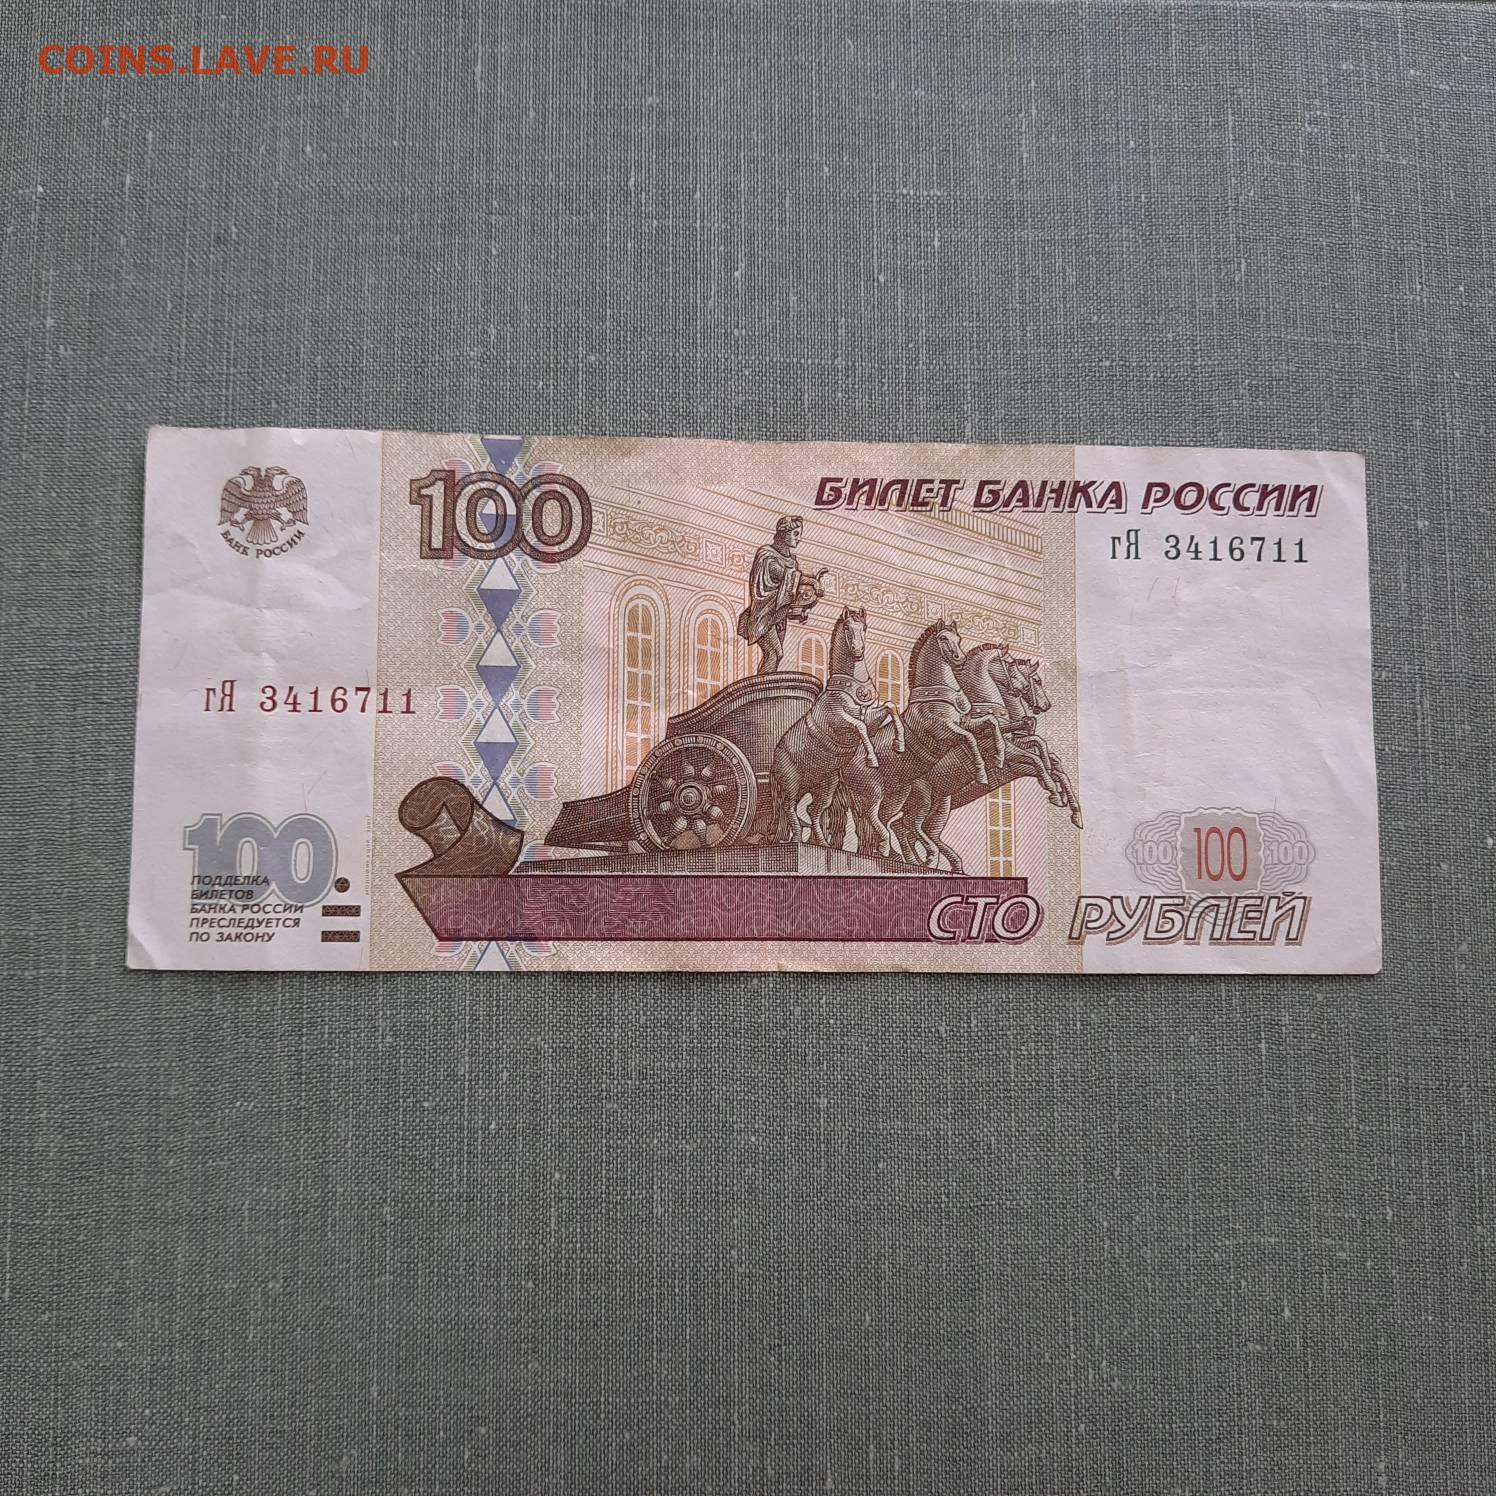 21 500 рублей. СТО рублей модификация 2001. 100 Рублей модификация 2001. 100 Рублей 1997. 10 Рублей модификация 2001.